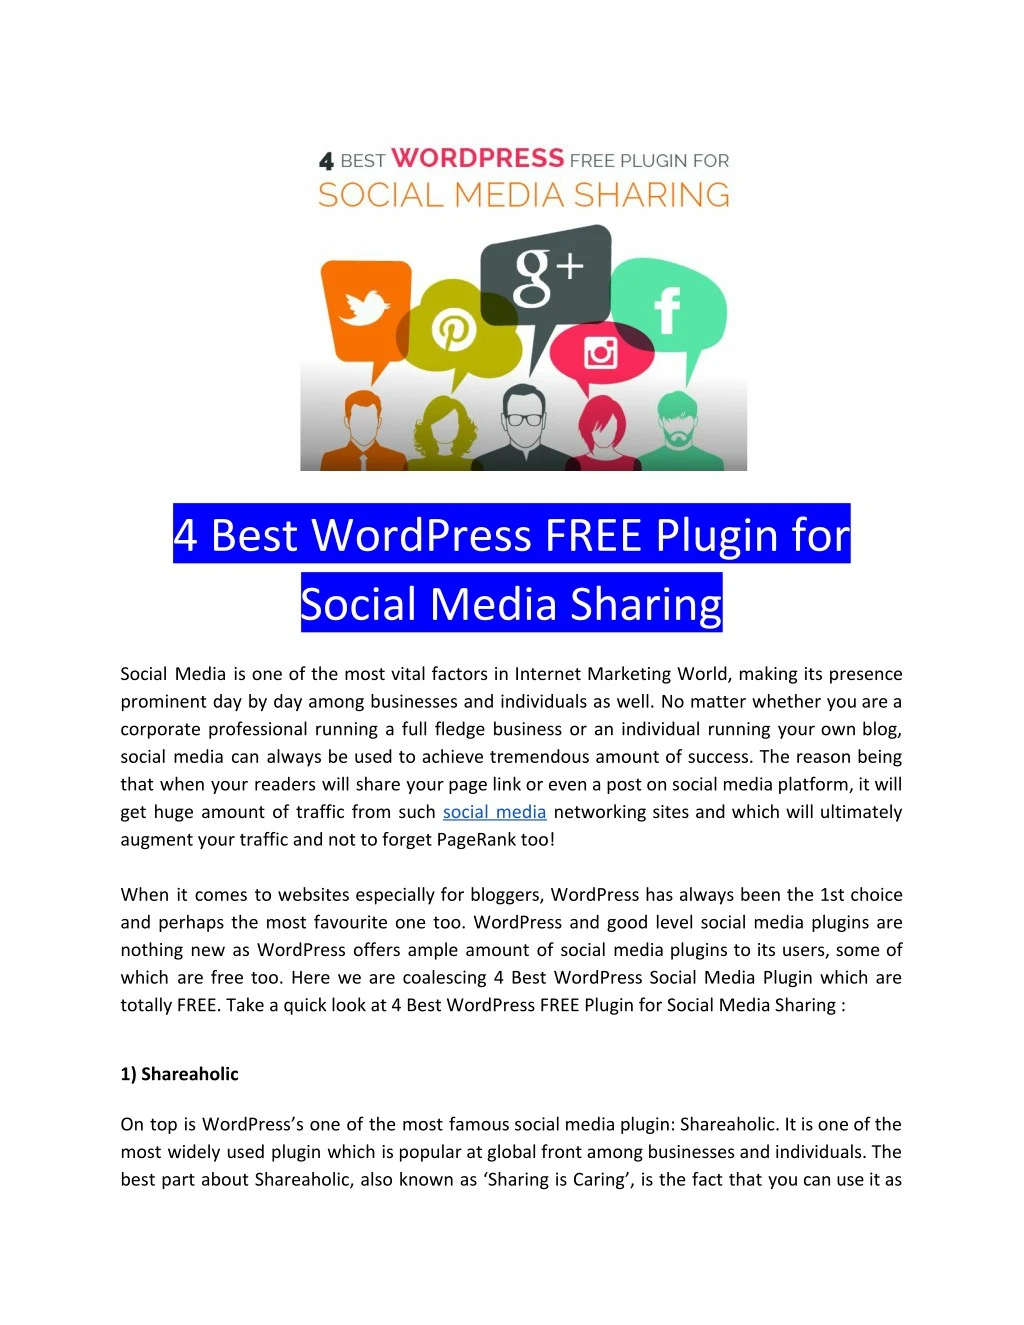 4 best wordpress free plugin for social media